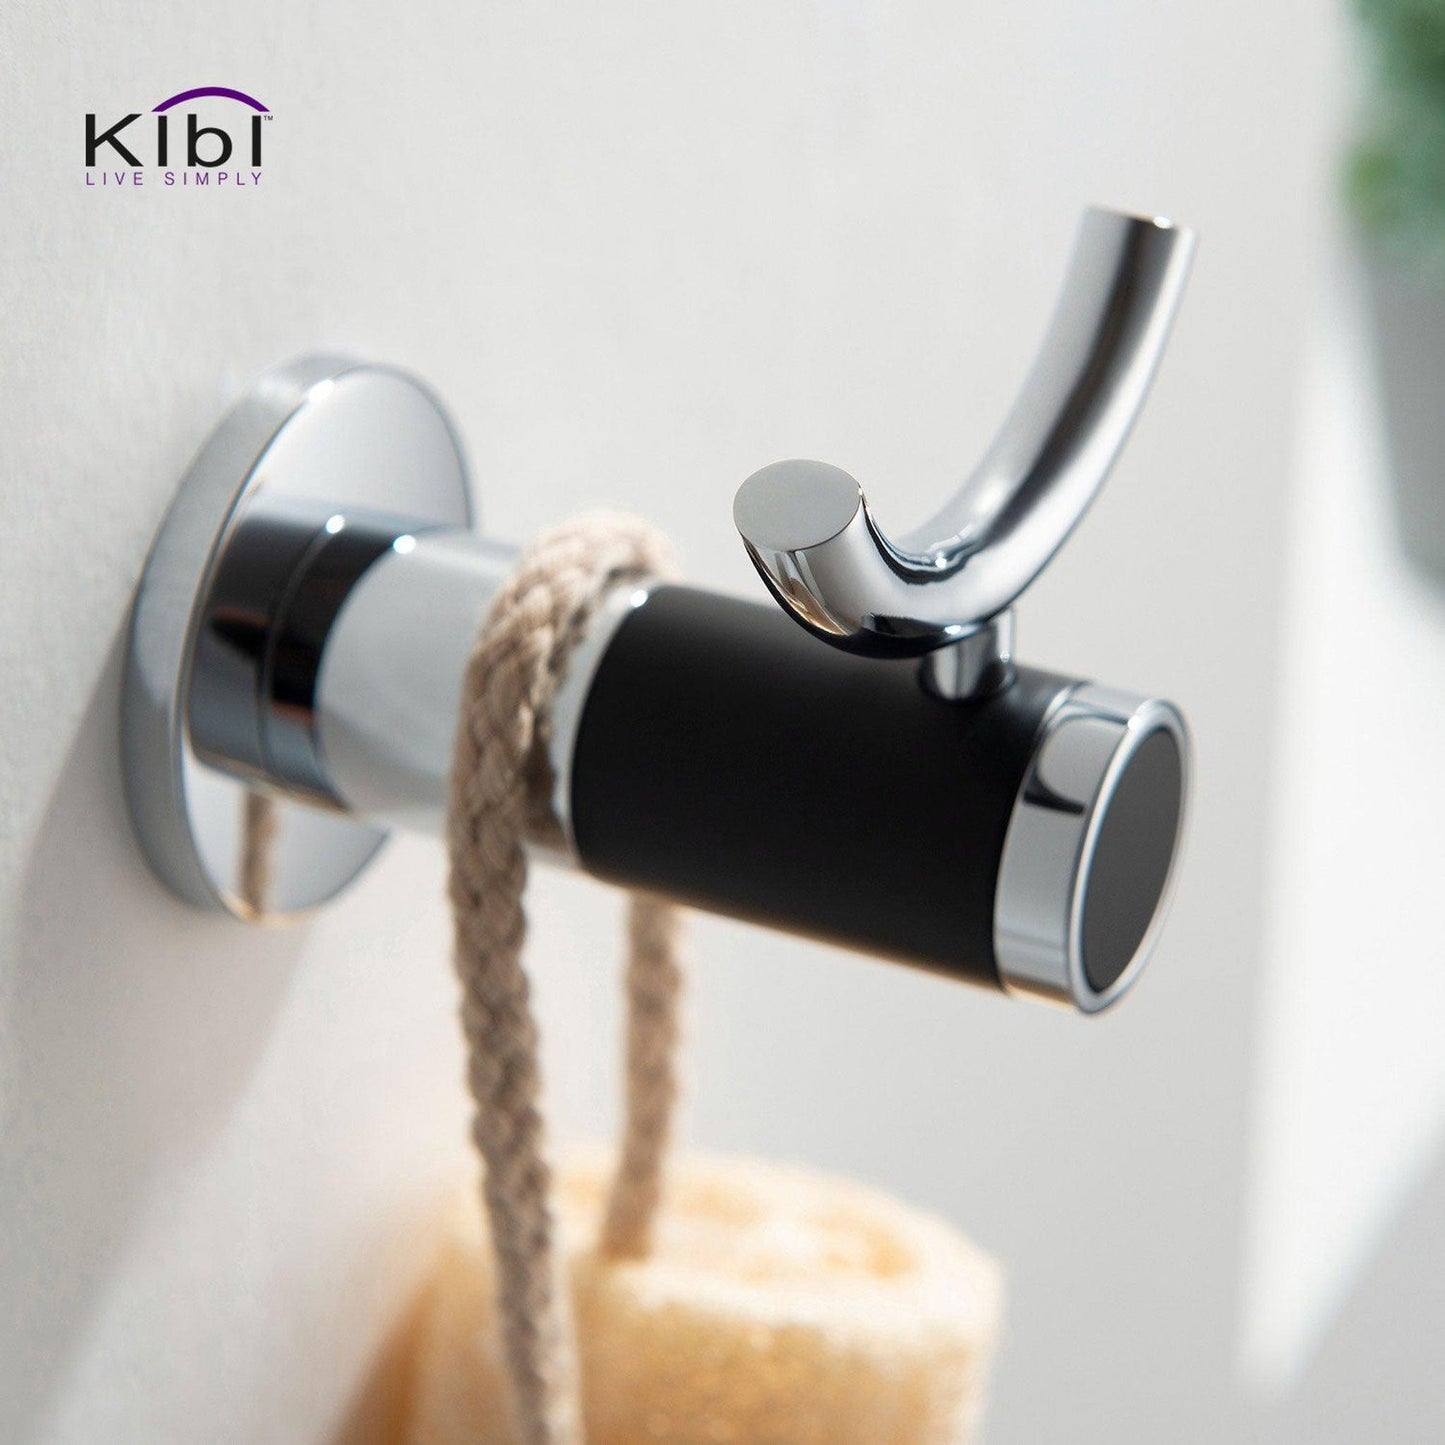 KIBI Abaco Bathroom Robe Hook in Chrome Black Finish